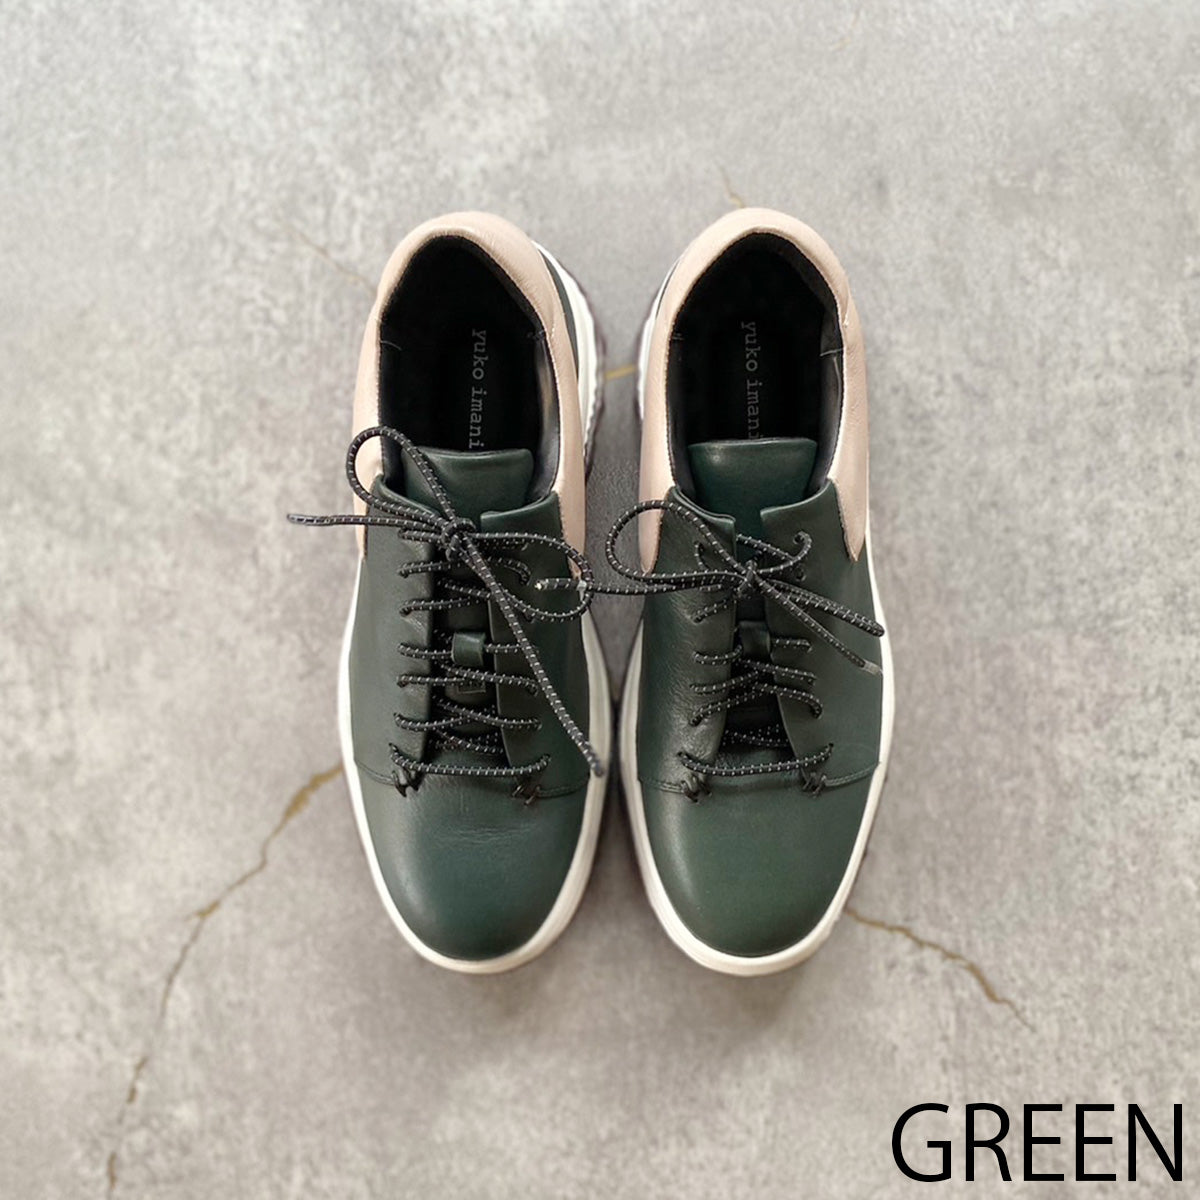 GREEN / 35 (22.2cm)